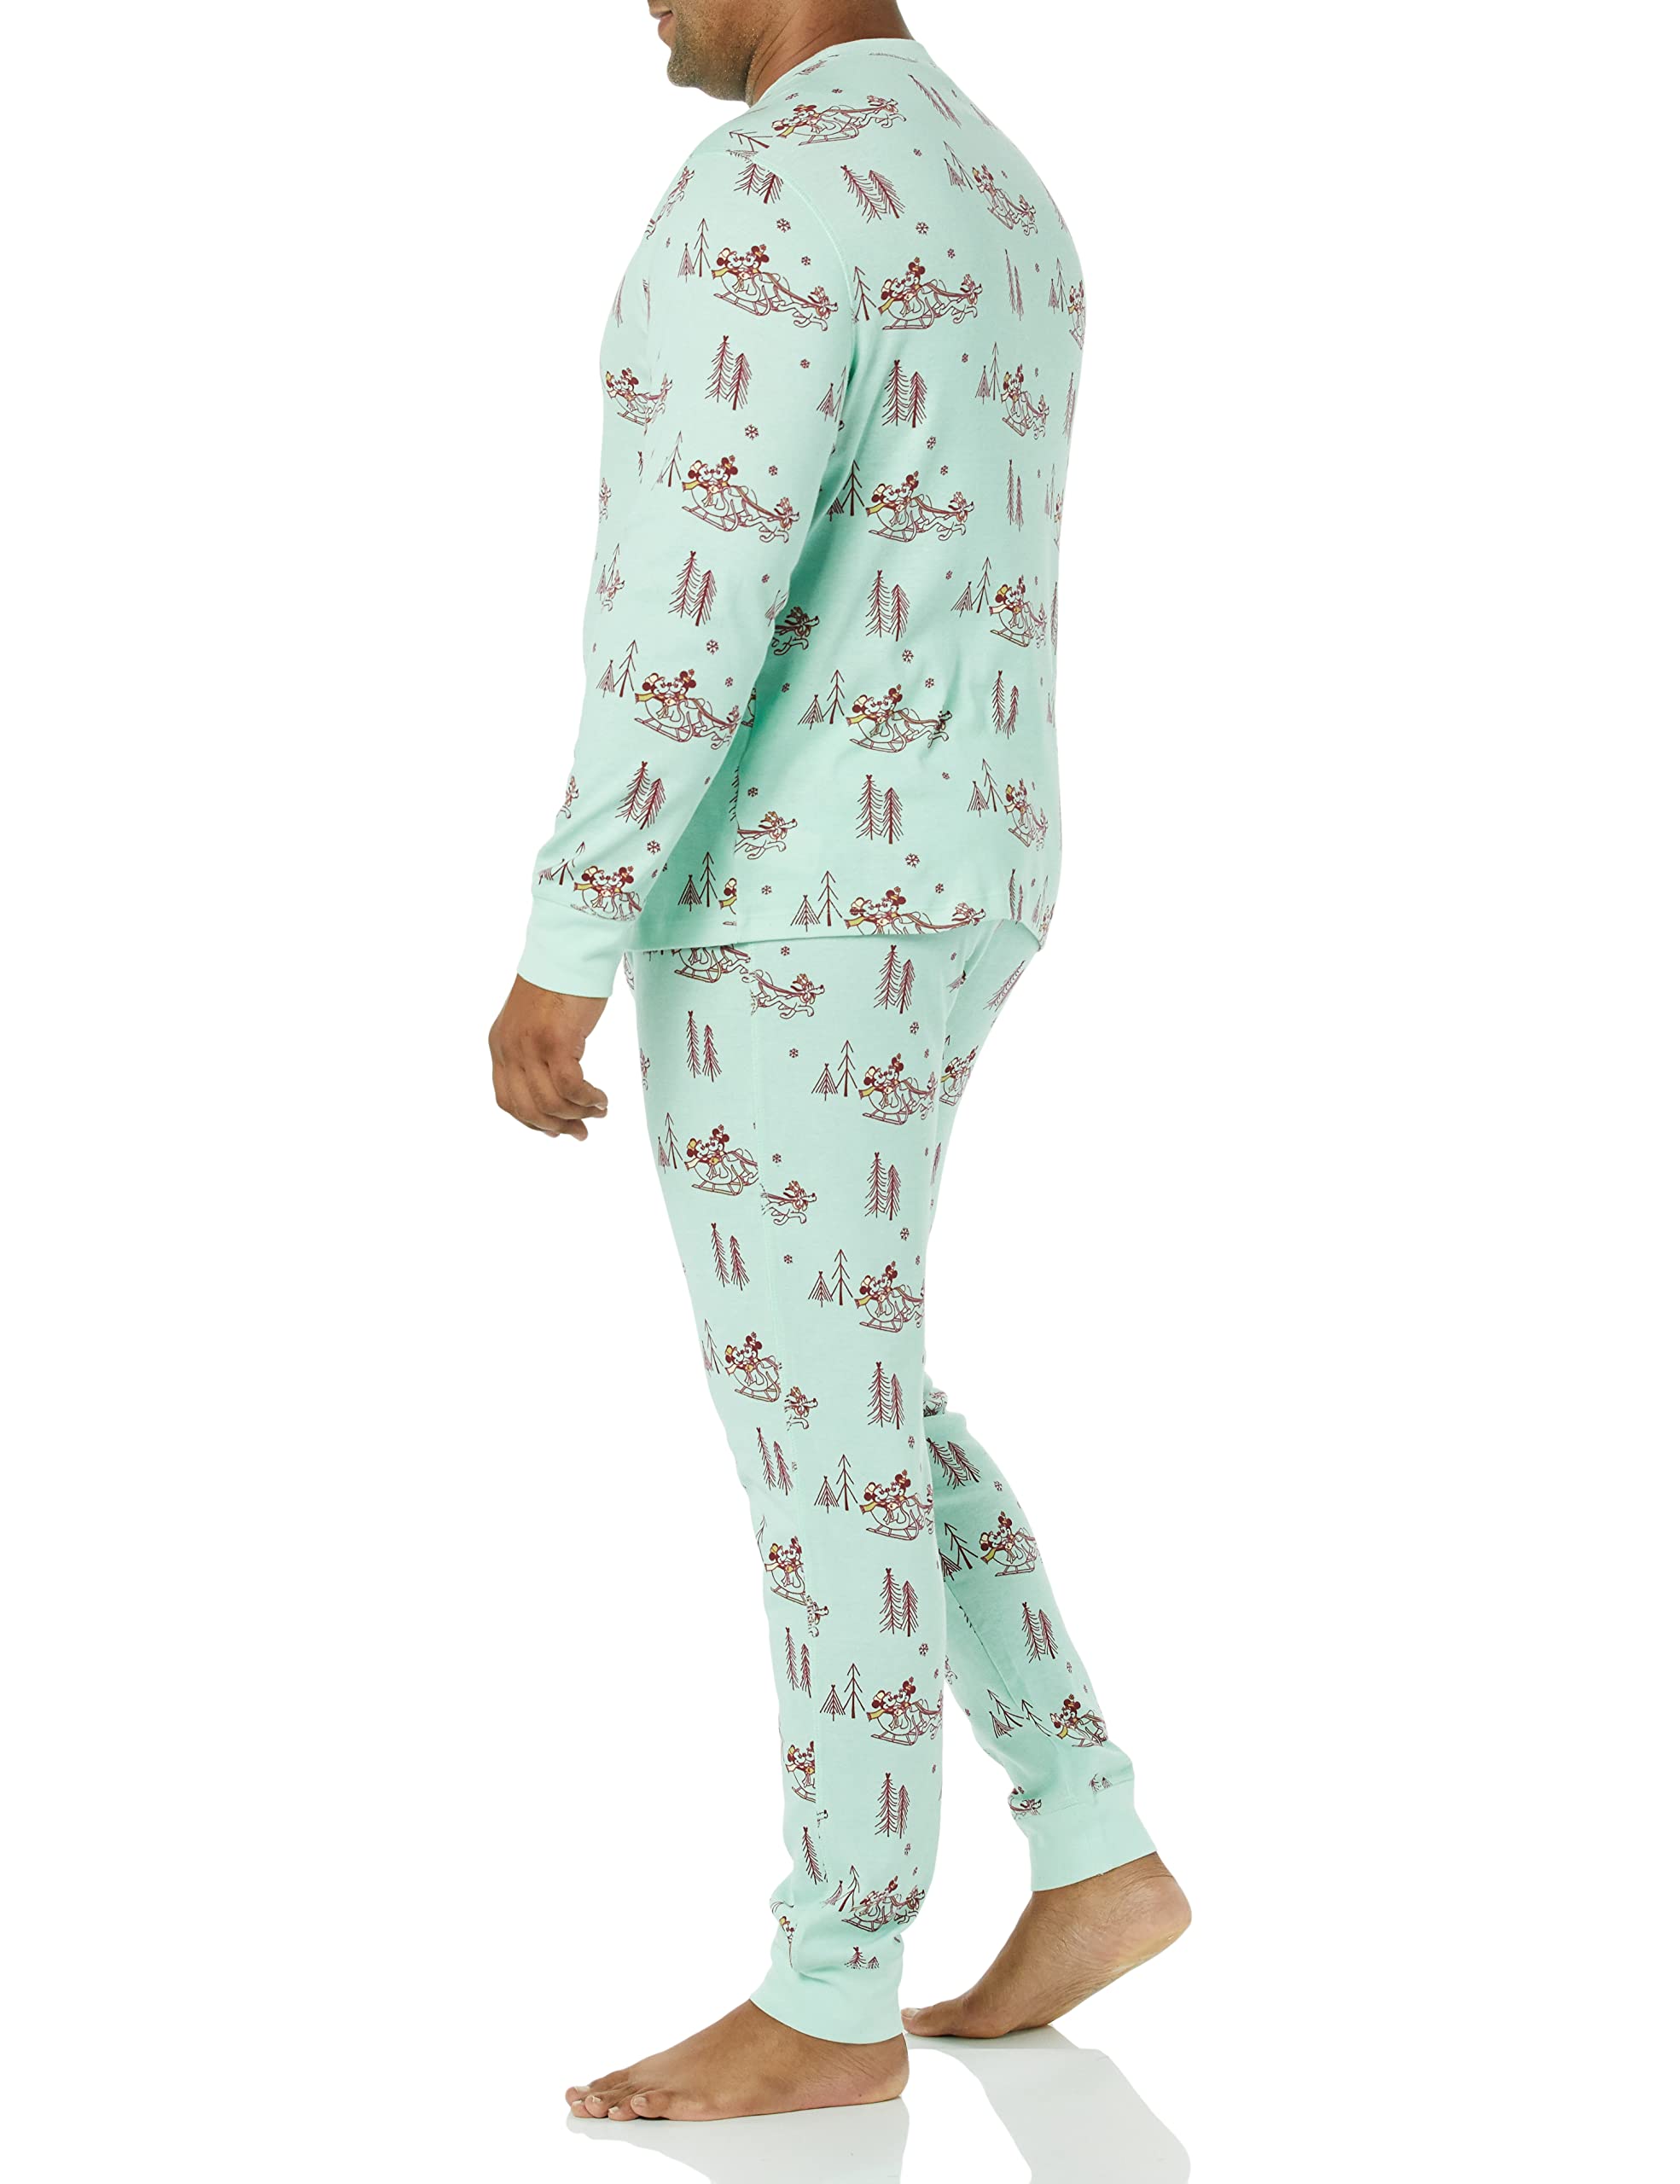 Amazon Essentials Disney Family Matching Pajama Sleep Sets